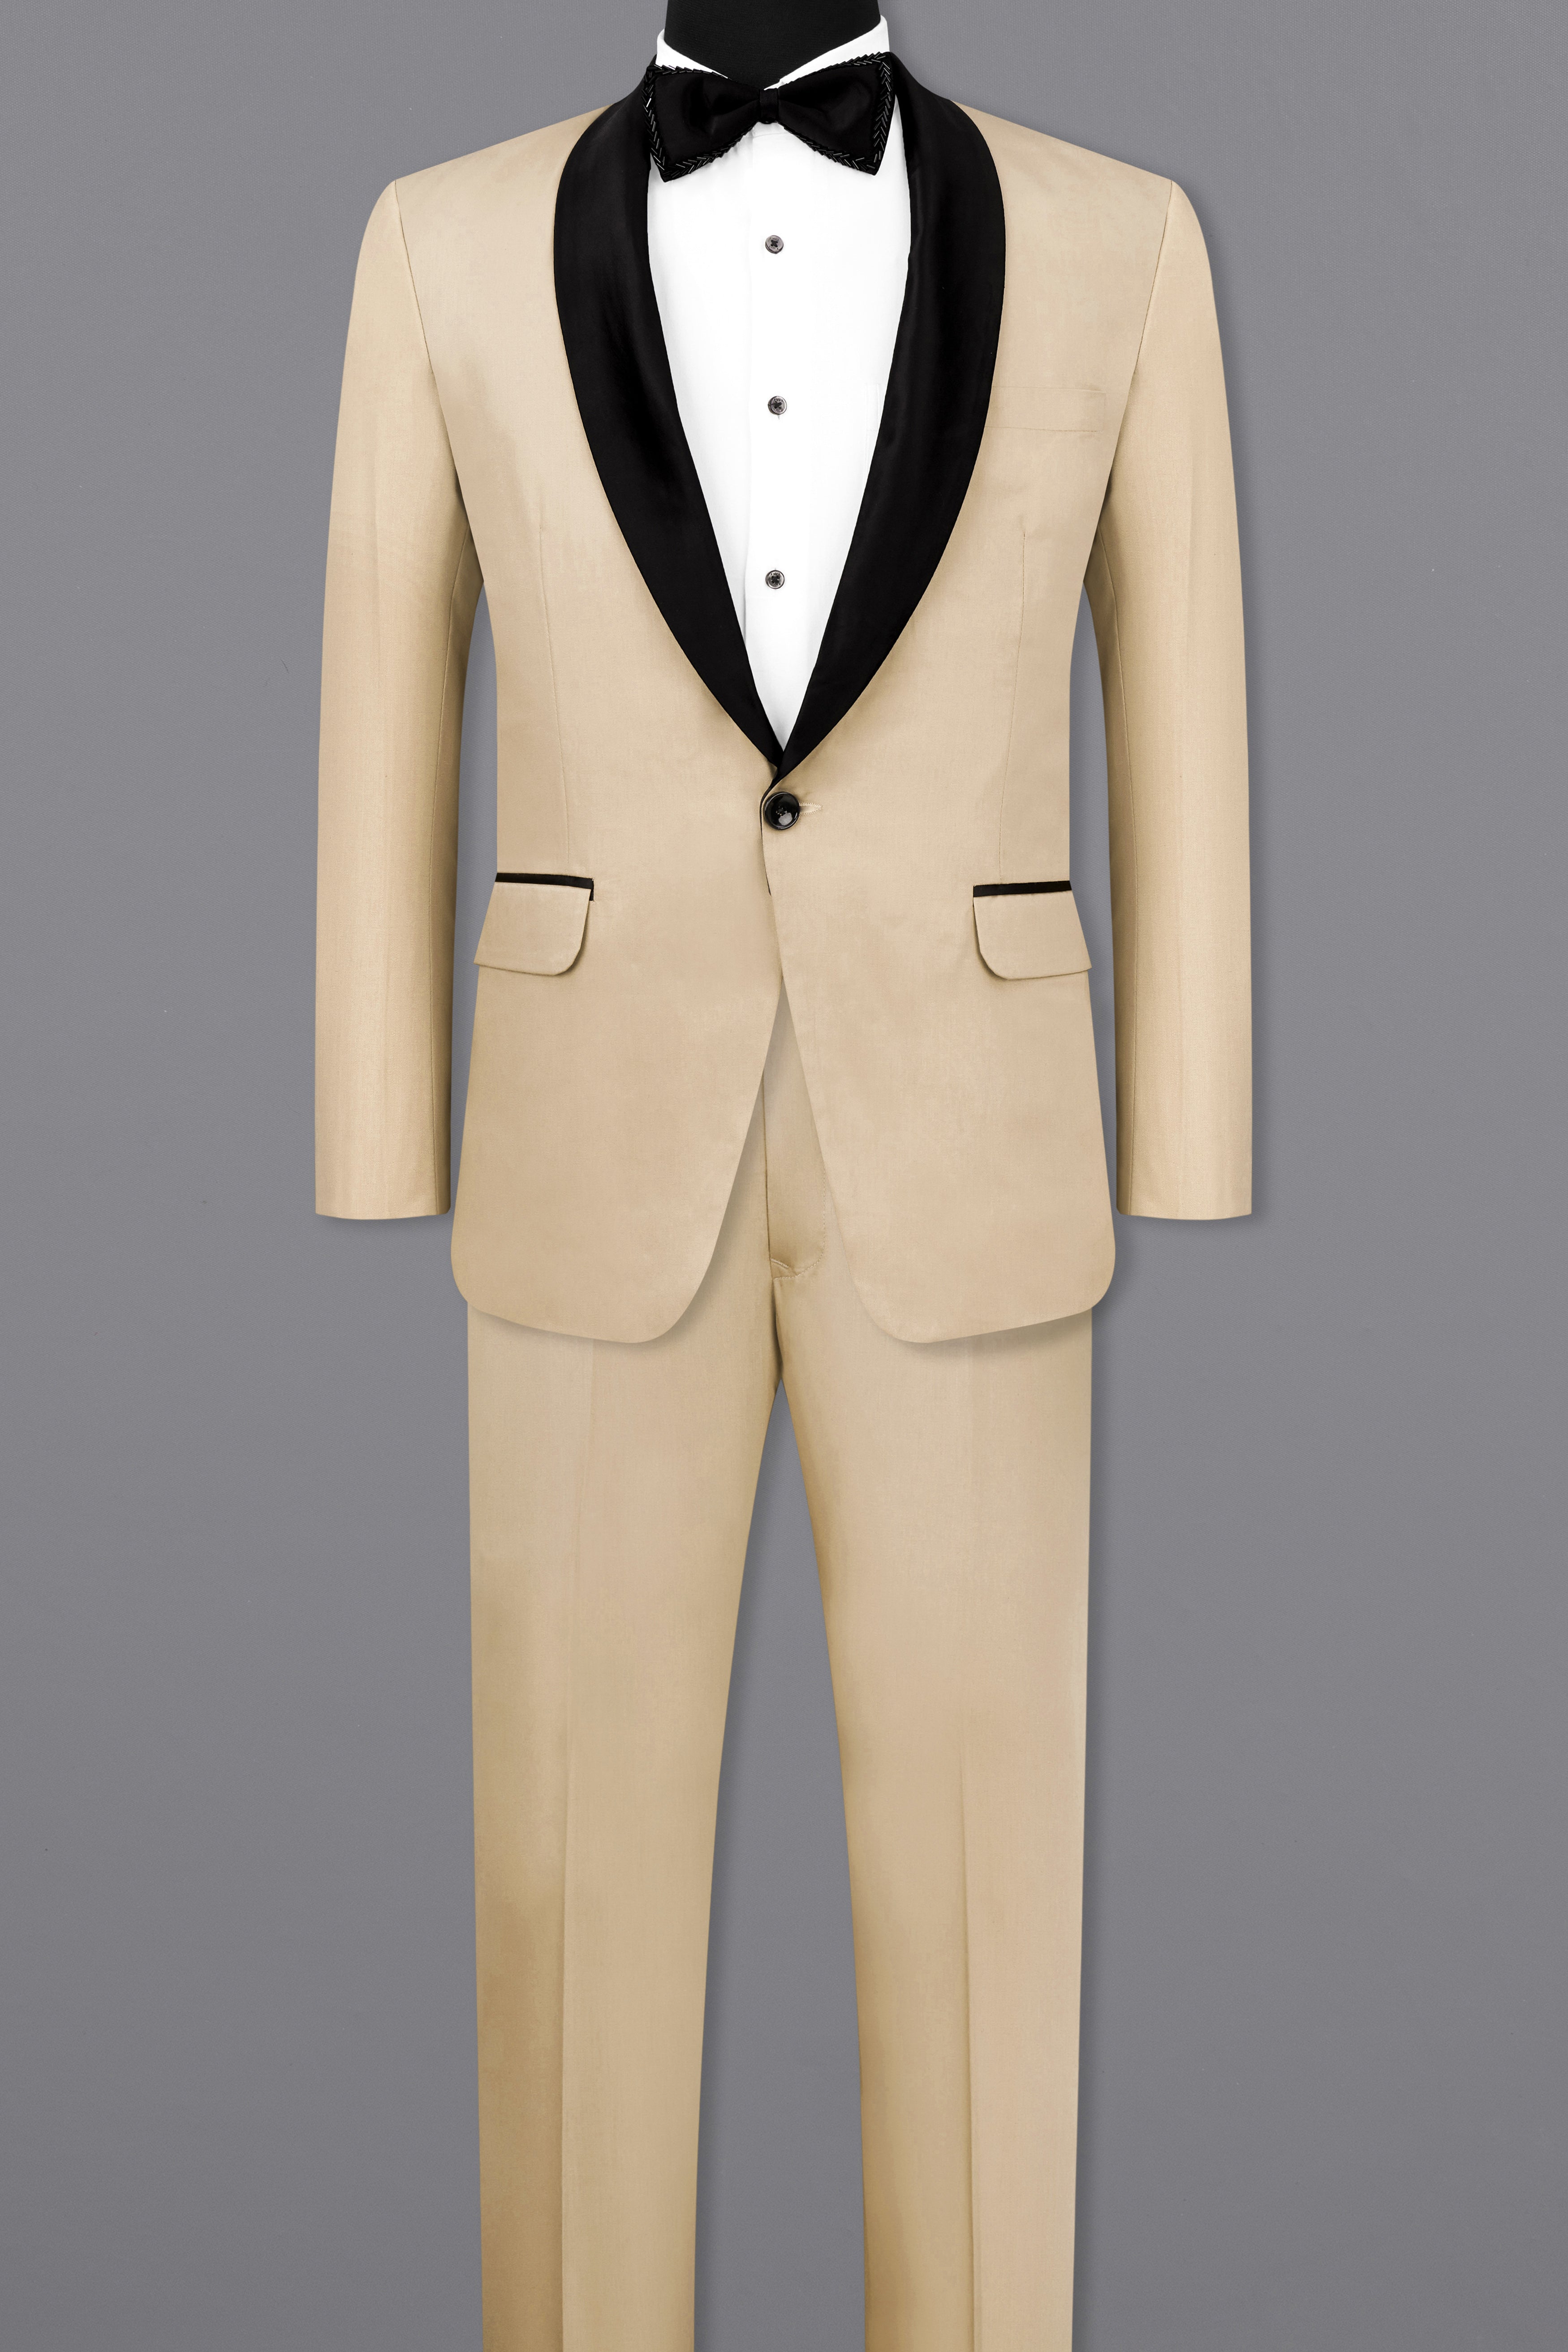 Hazelnut Cream Subtle Sheen Tuxedo Suit